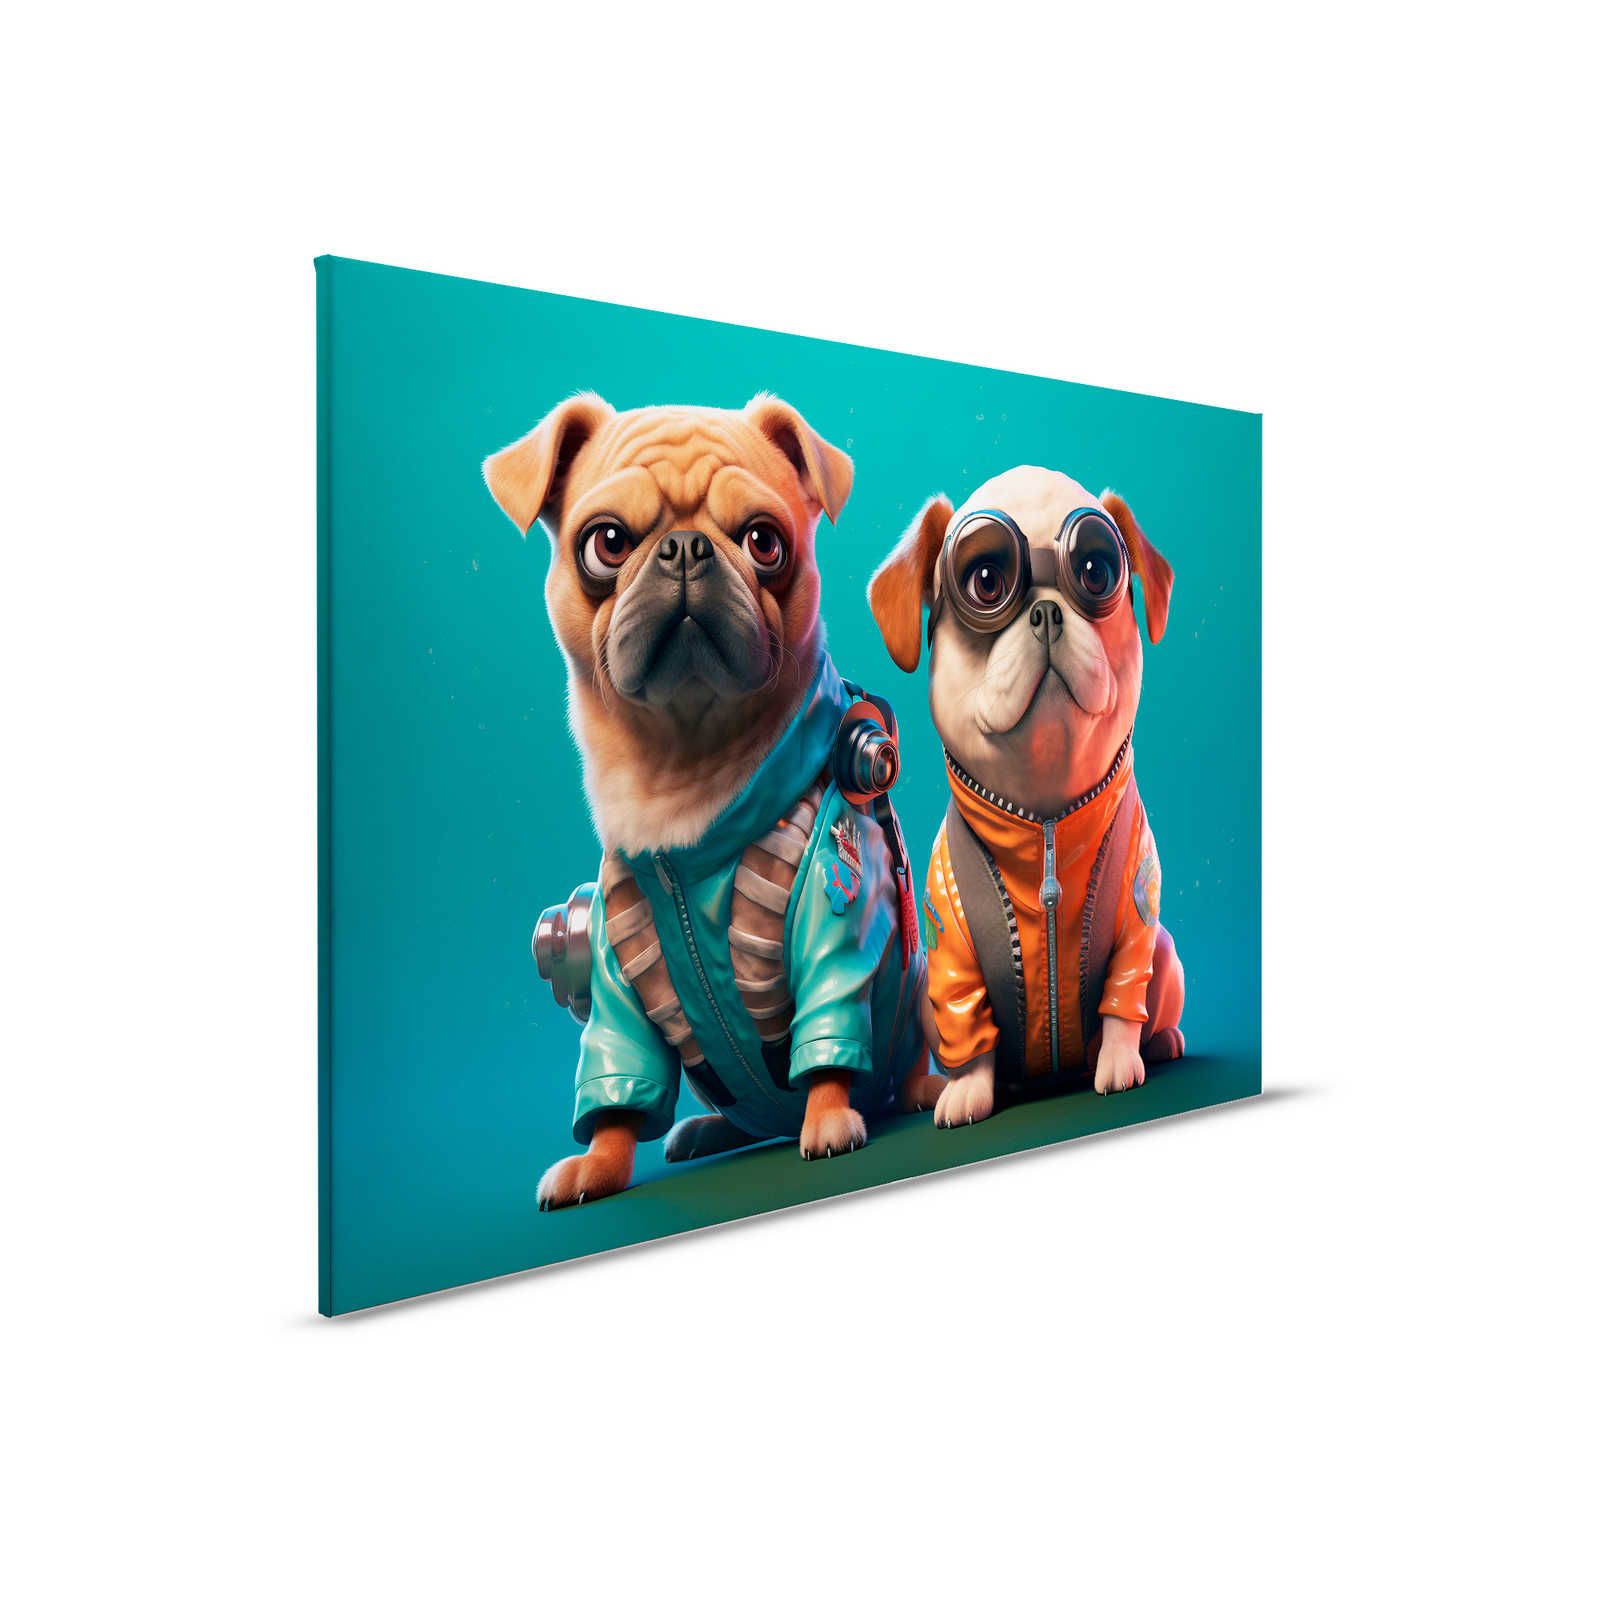         KI Canvas painting »Cute Dogs« - 90 cm x 60 cm
    